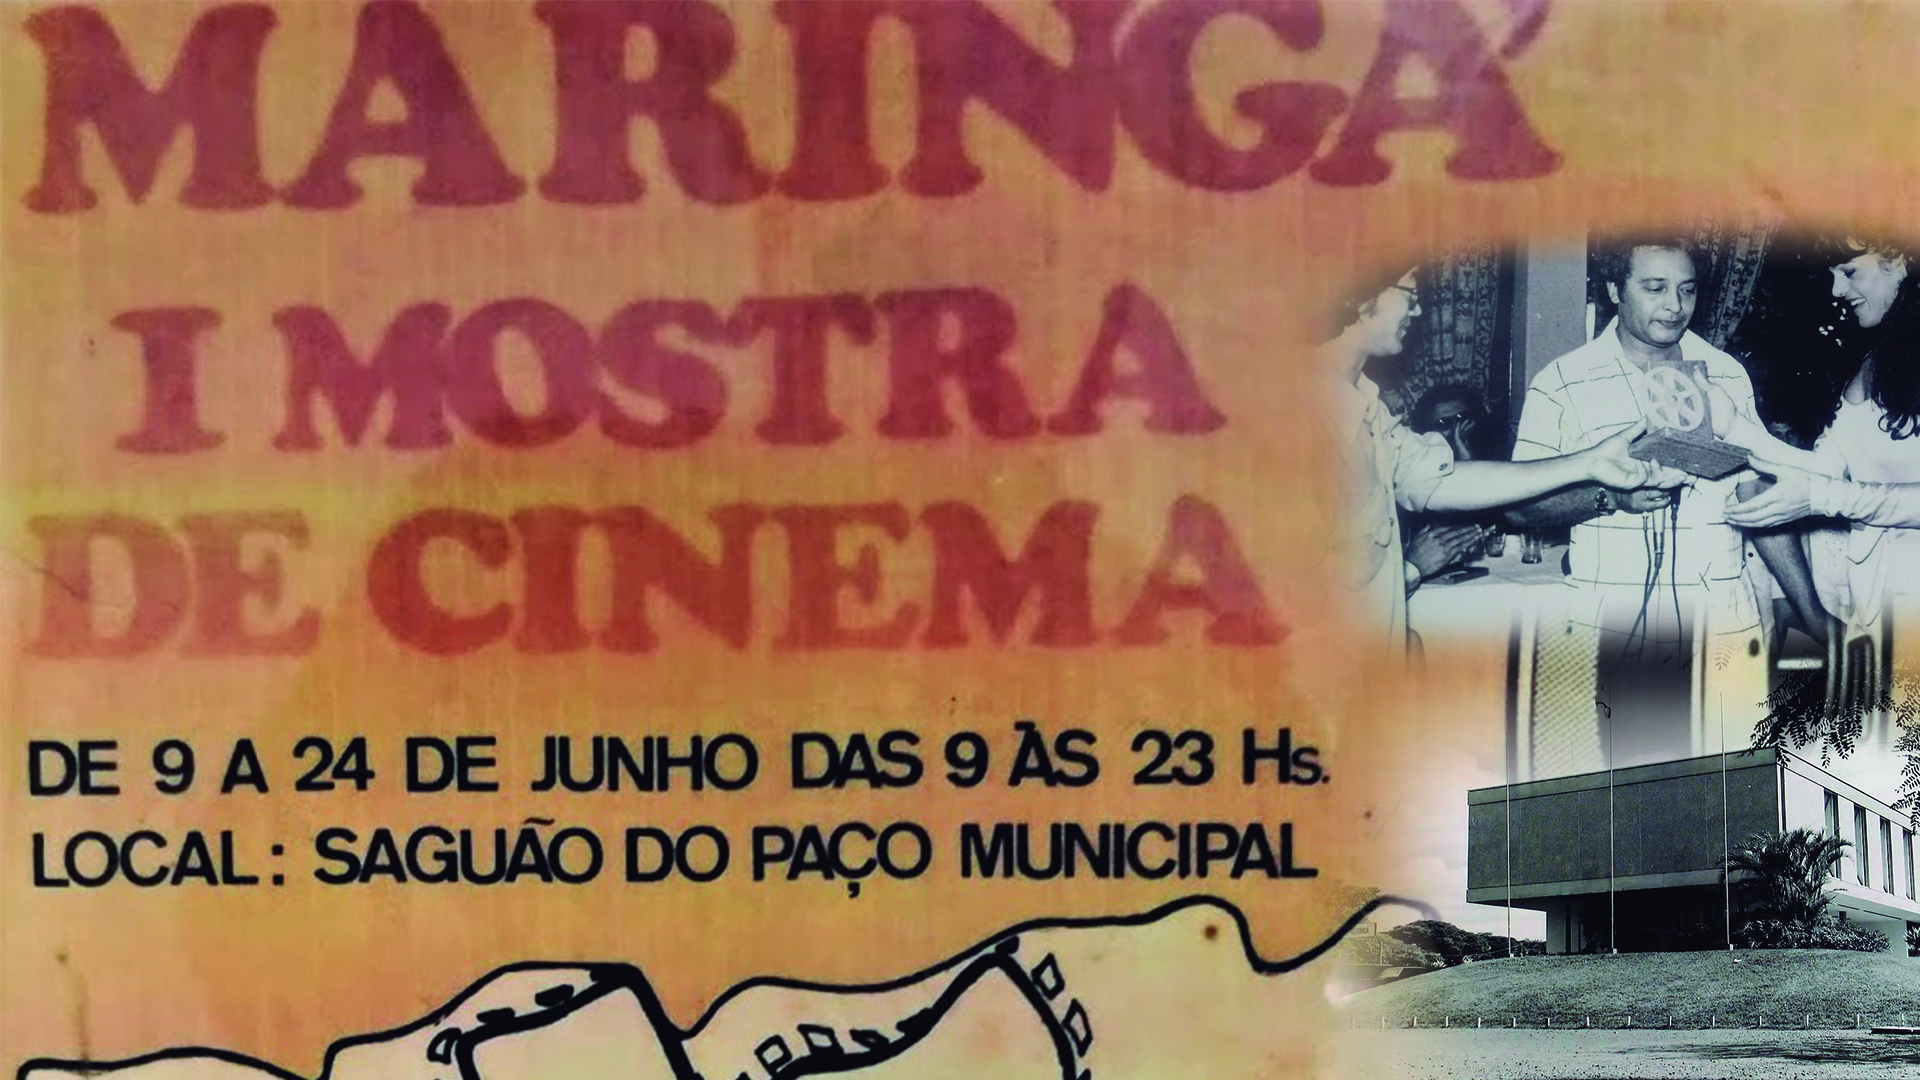 I Mostra de Cinema de Maringá - 1979